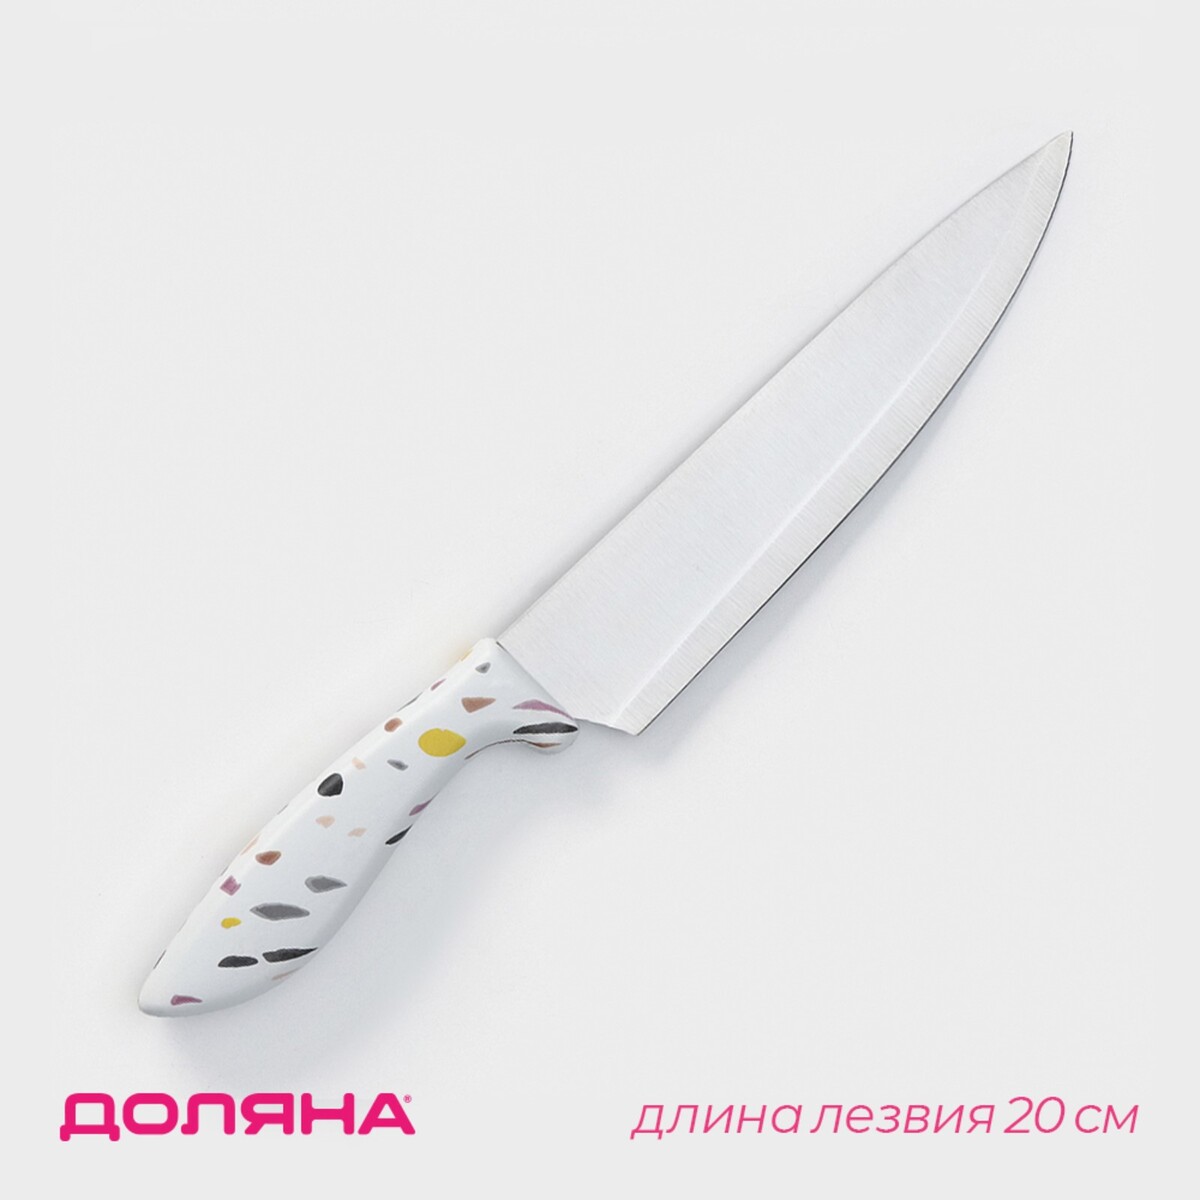 Нож - шеф доляна sparkle, лезвие 20 см, цвет белый нож топорик доляна sparkle белый